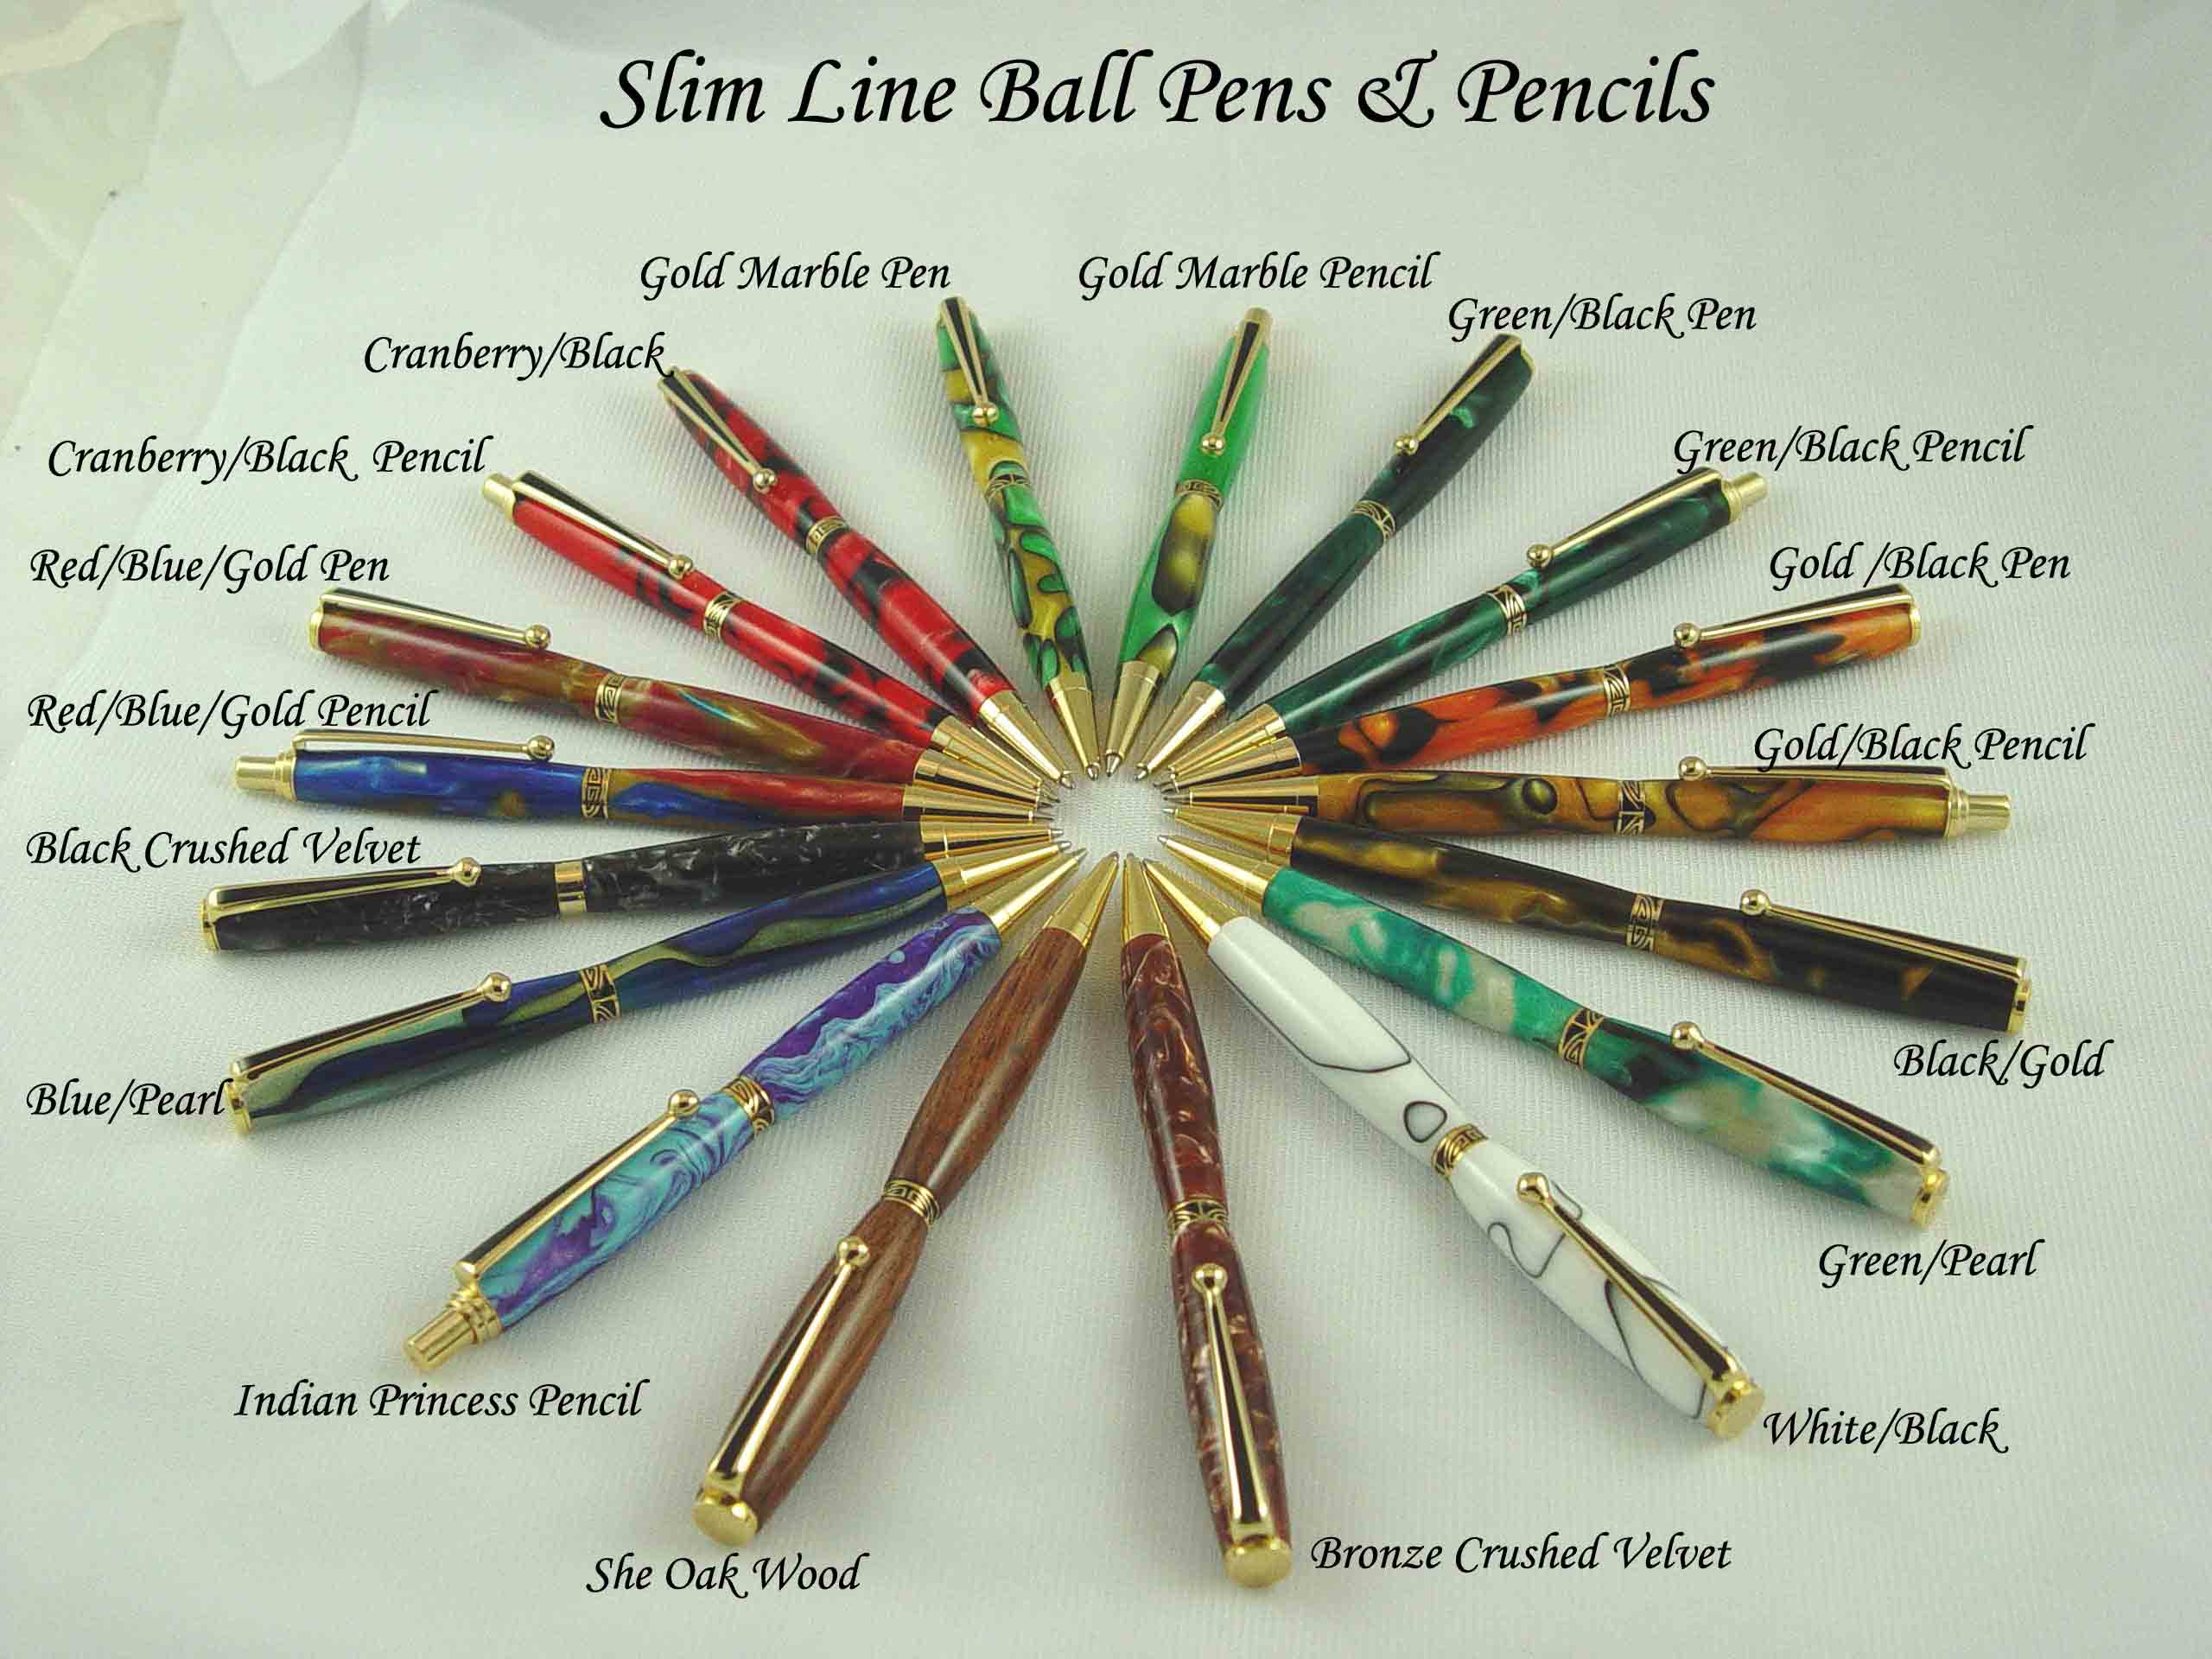 Slim Line Ball Pens